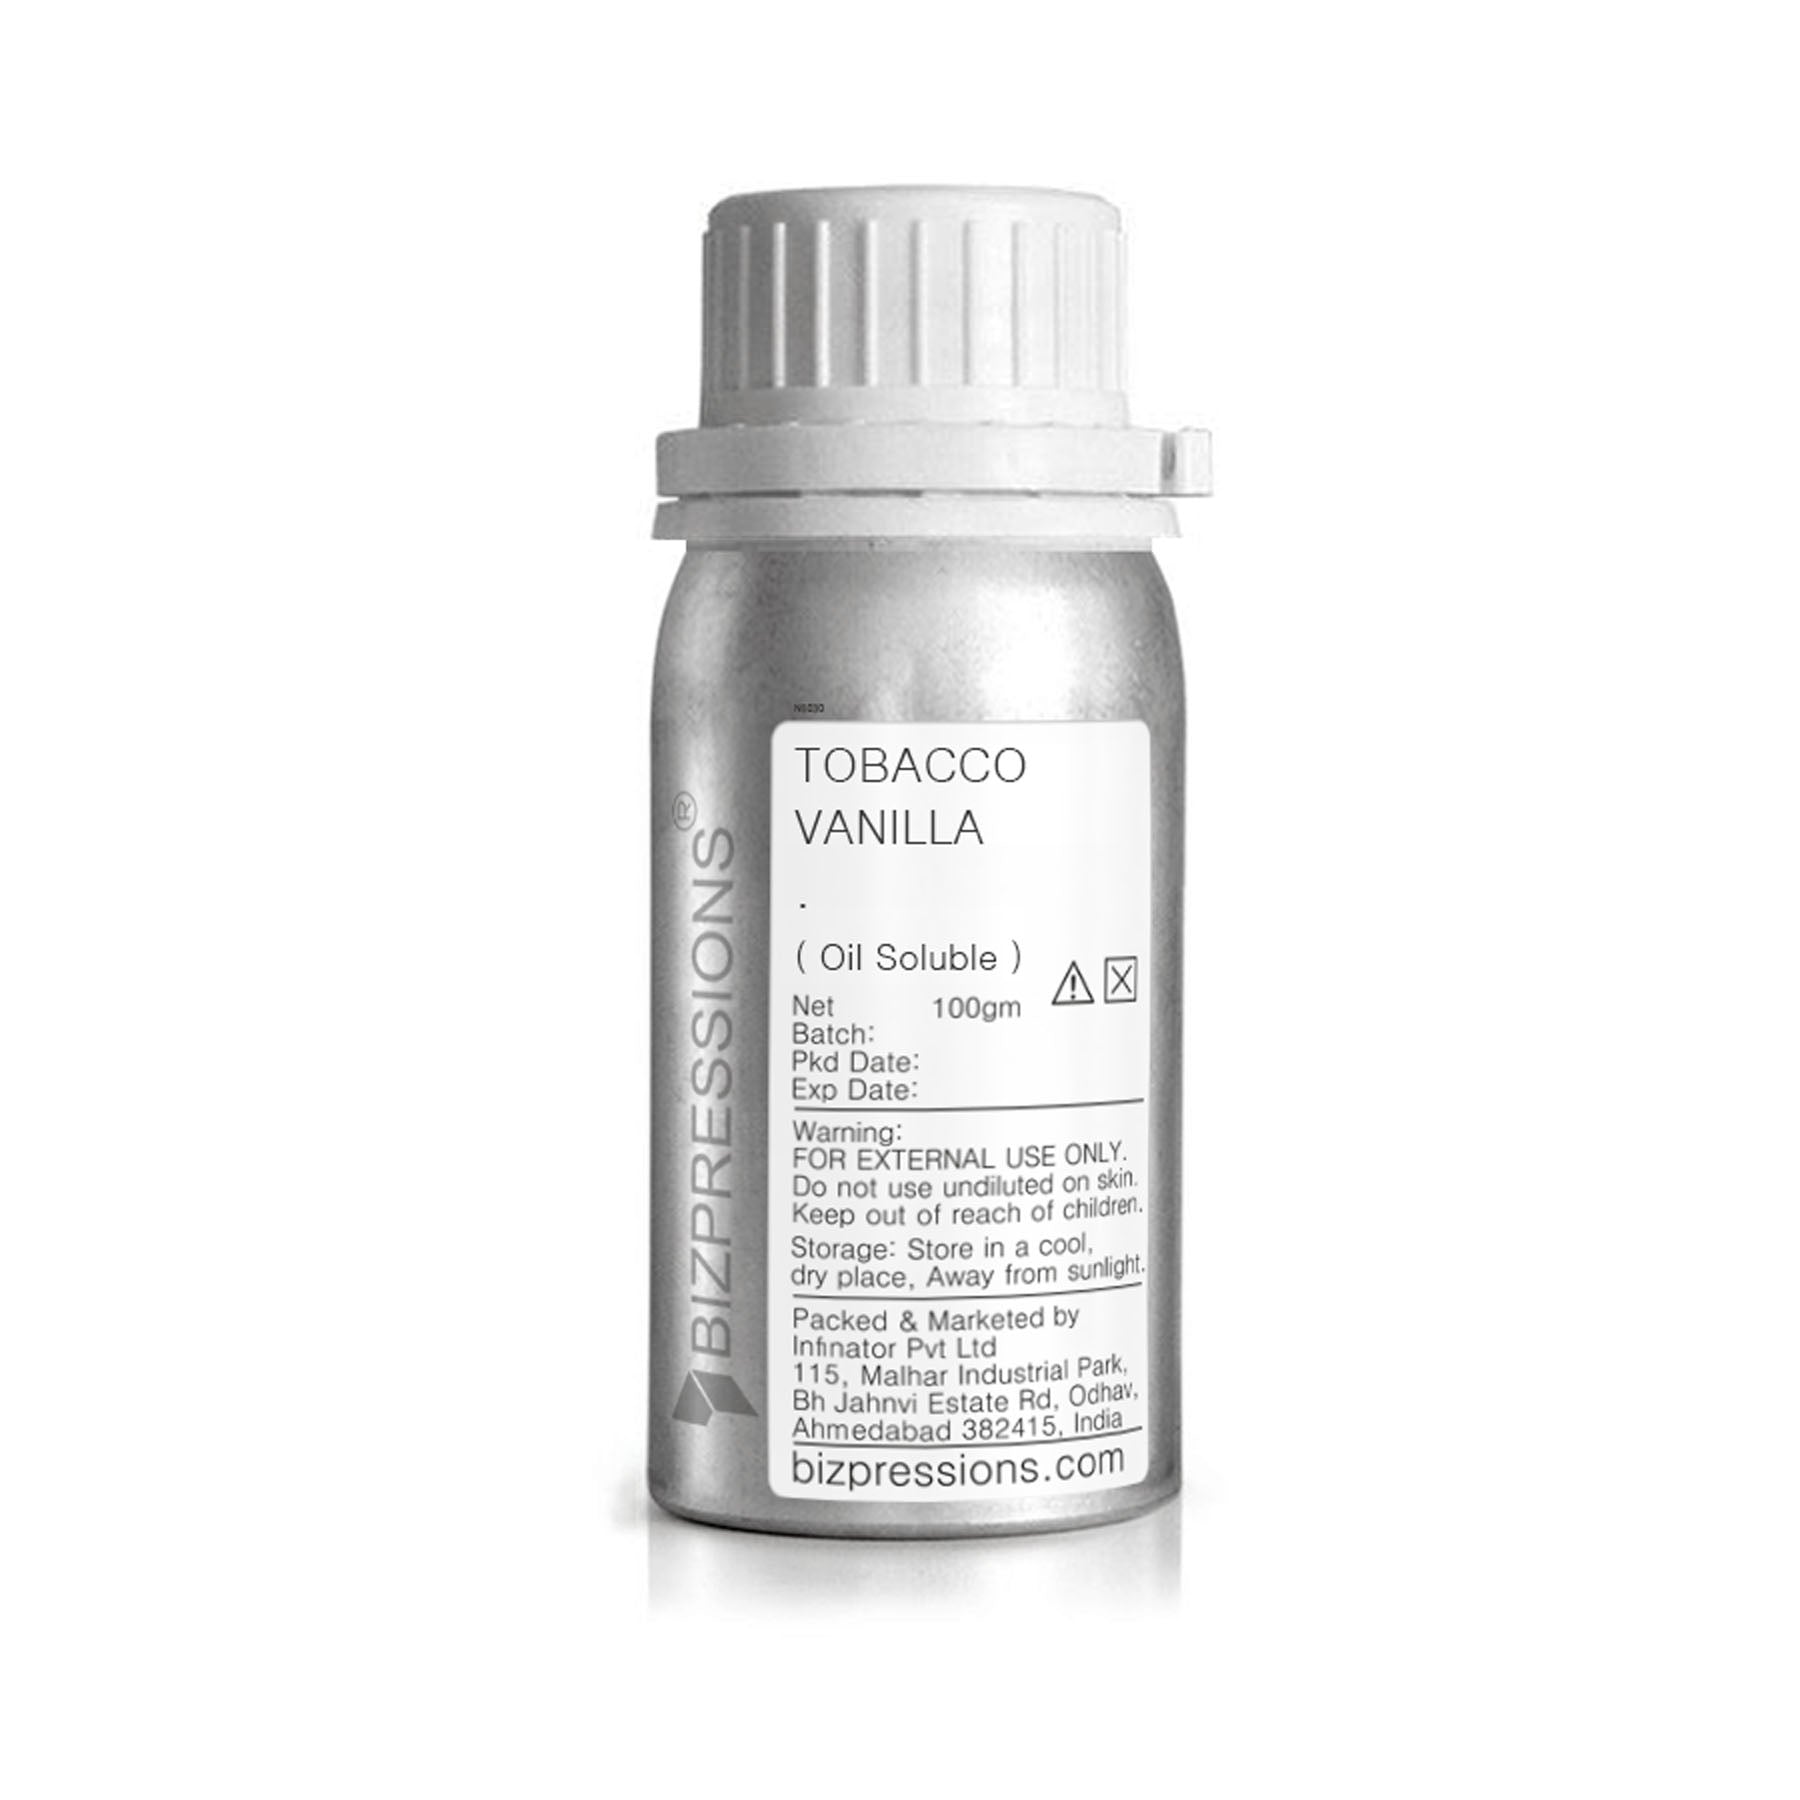 TOBACCO VANILLA - Fragrance ( Oil Soluble ) - 100 gm